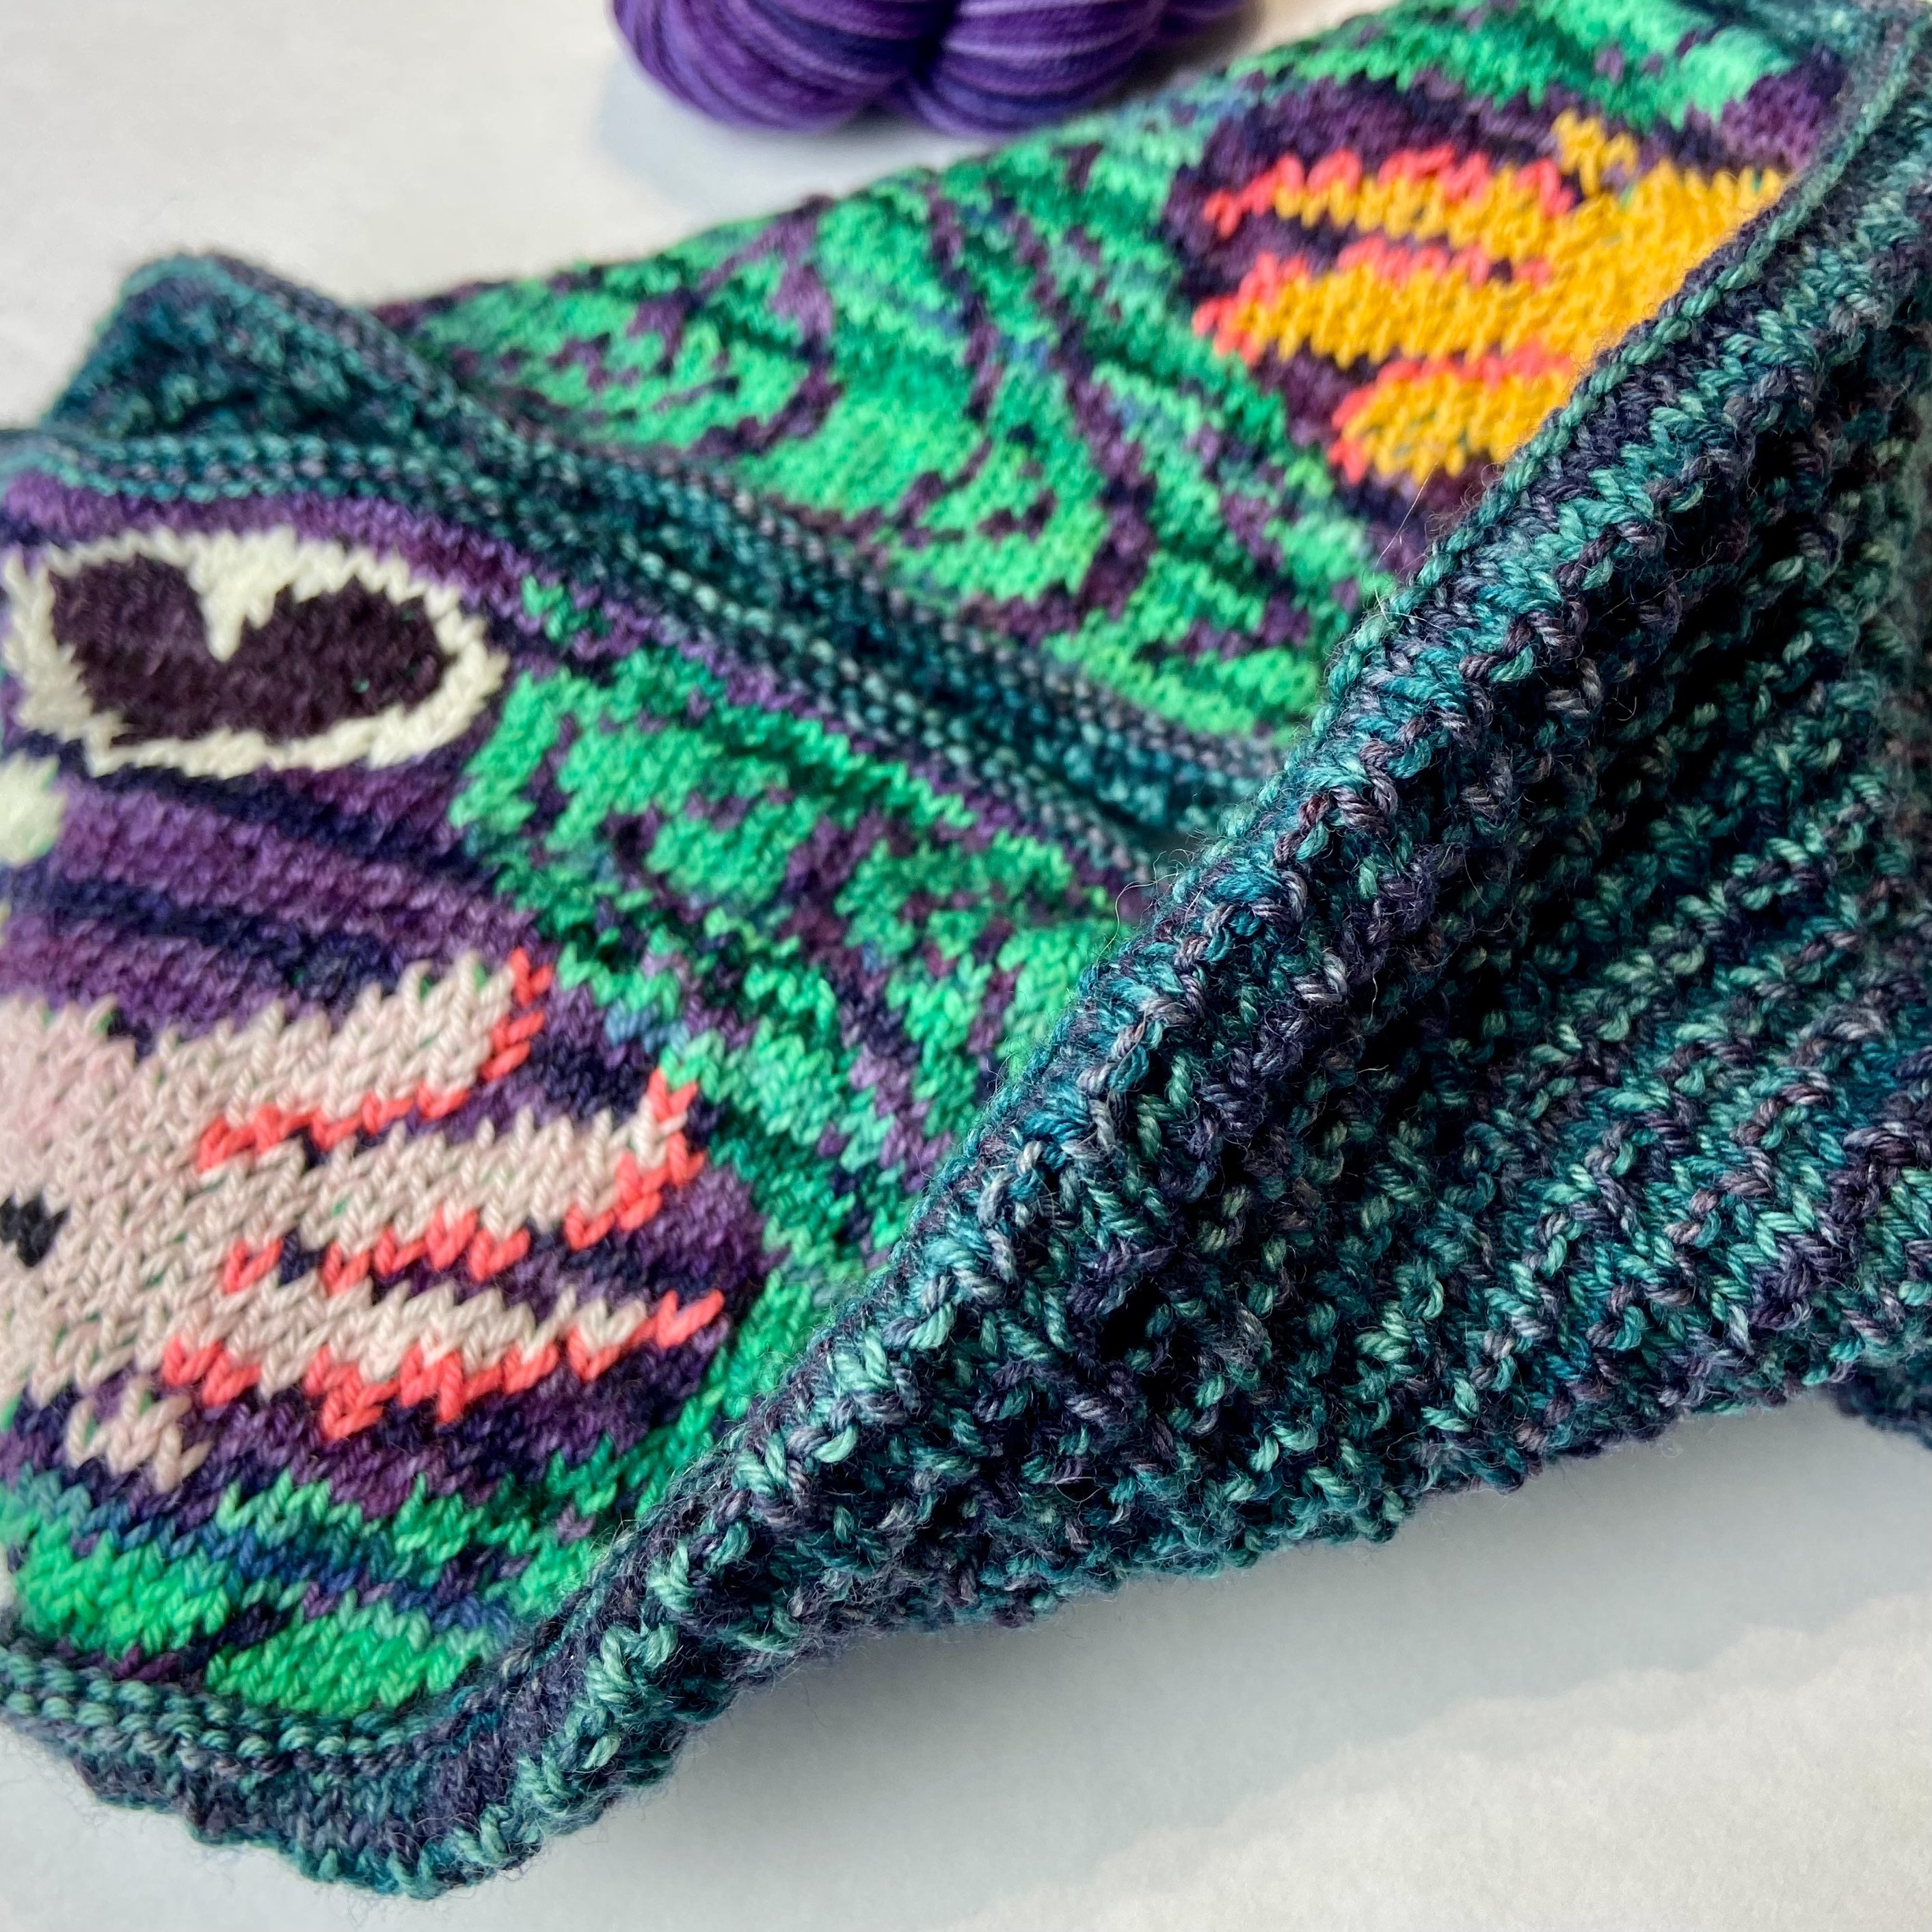 Lovealotl Axolotl Cowl Knitting Pattern - Paper Copy